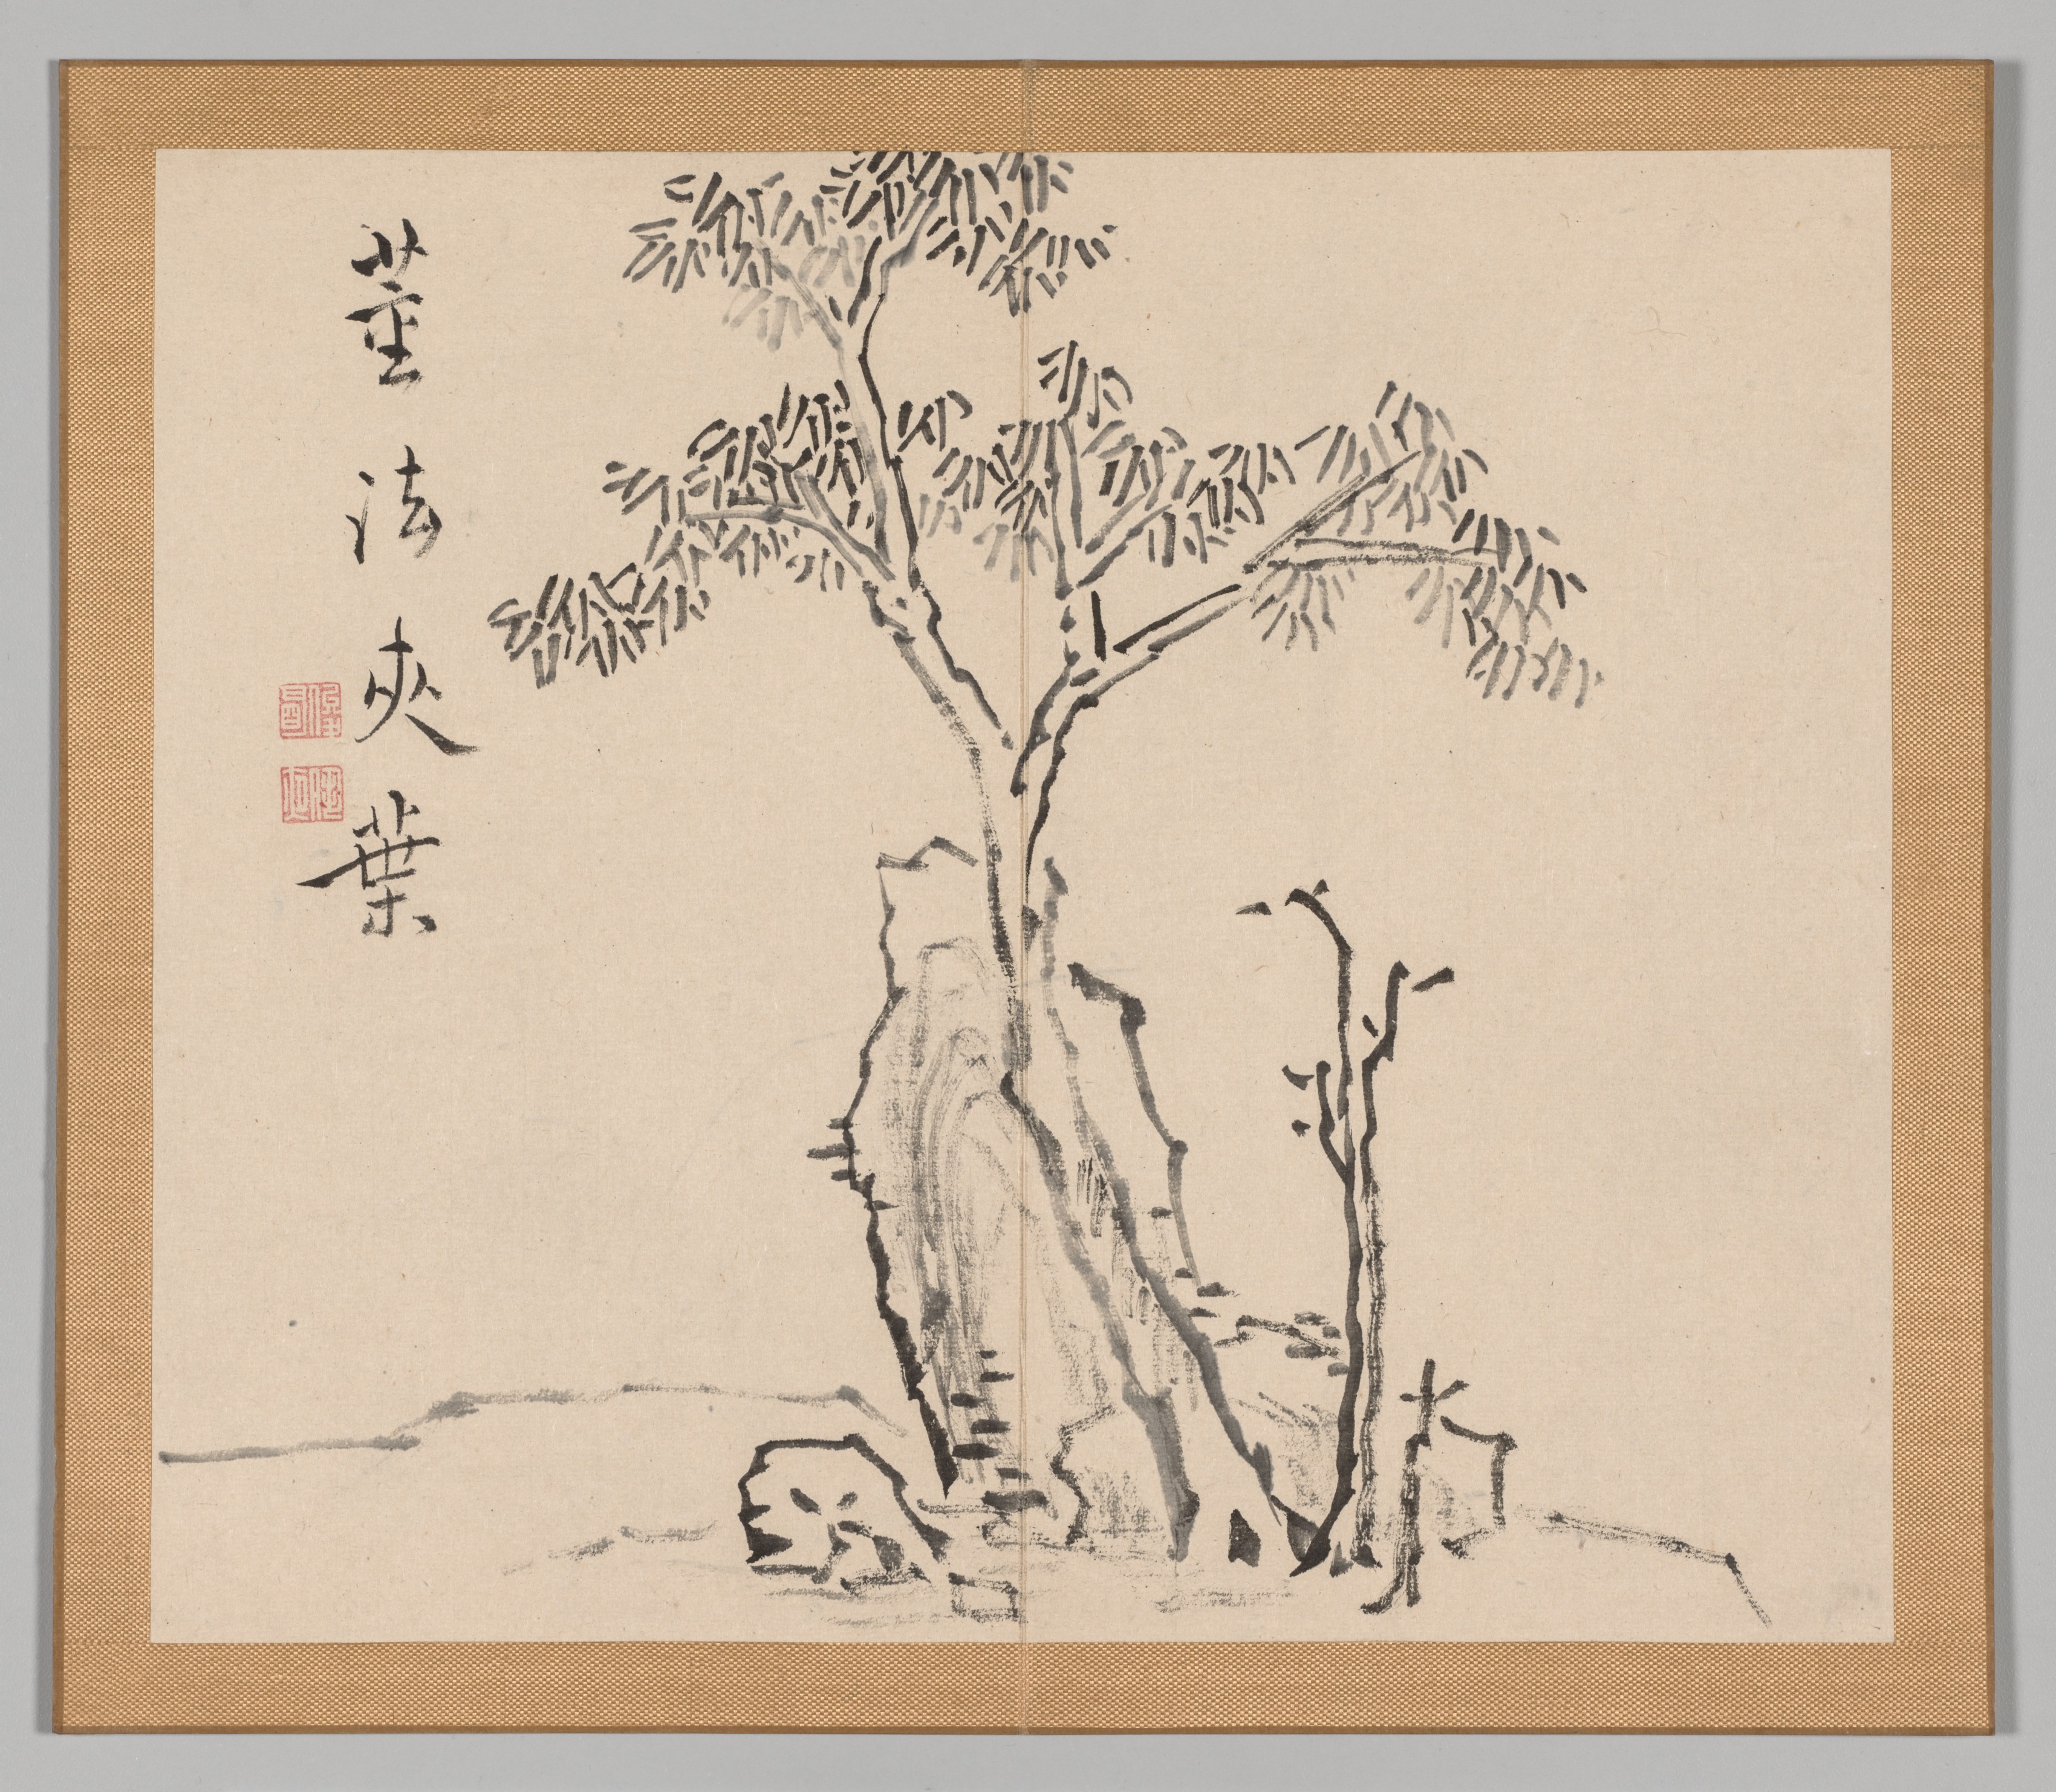 Reverberations of Taiga, Volume 1 (leaf 4)